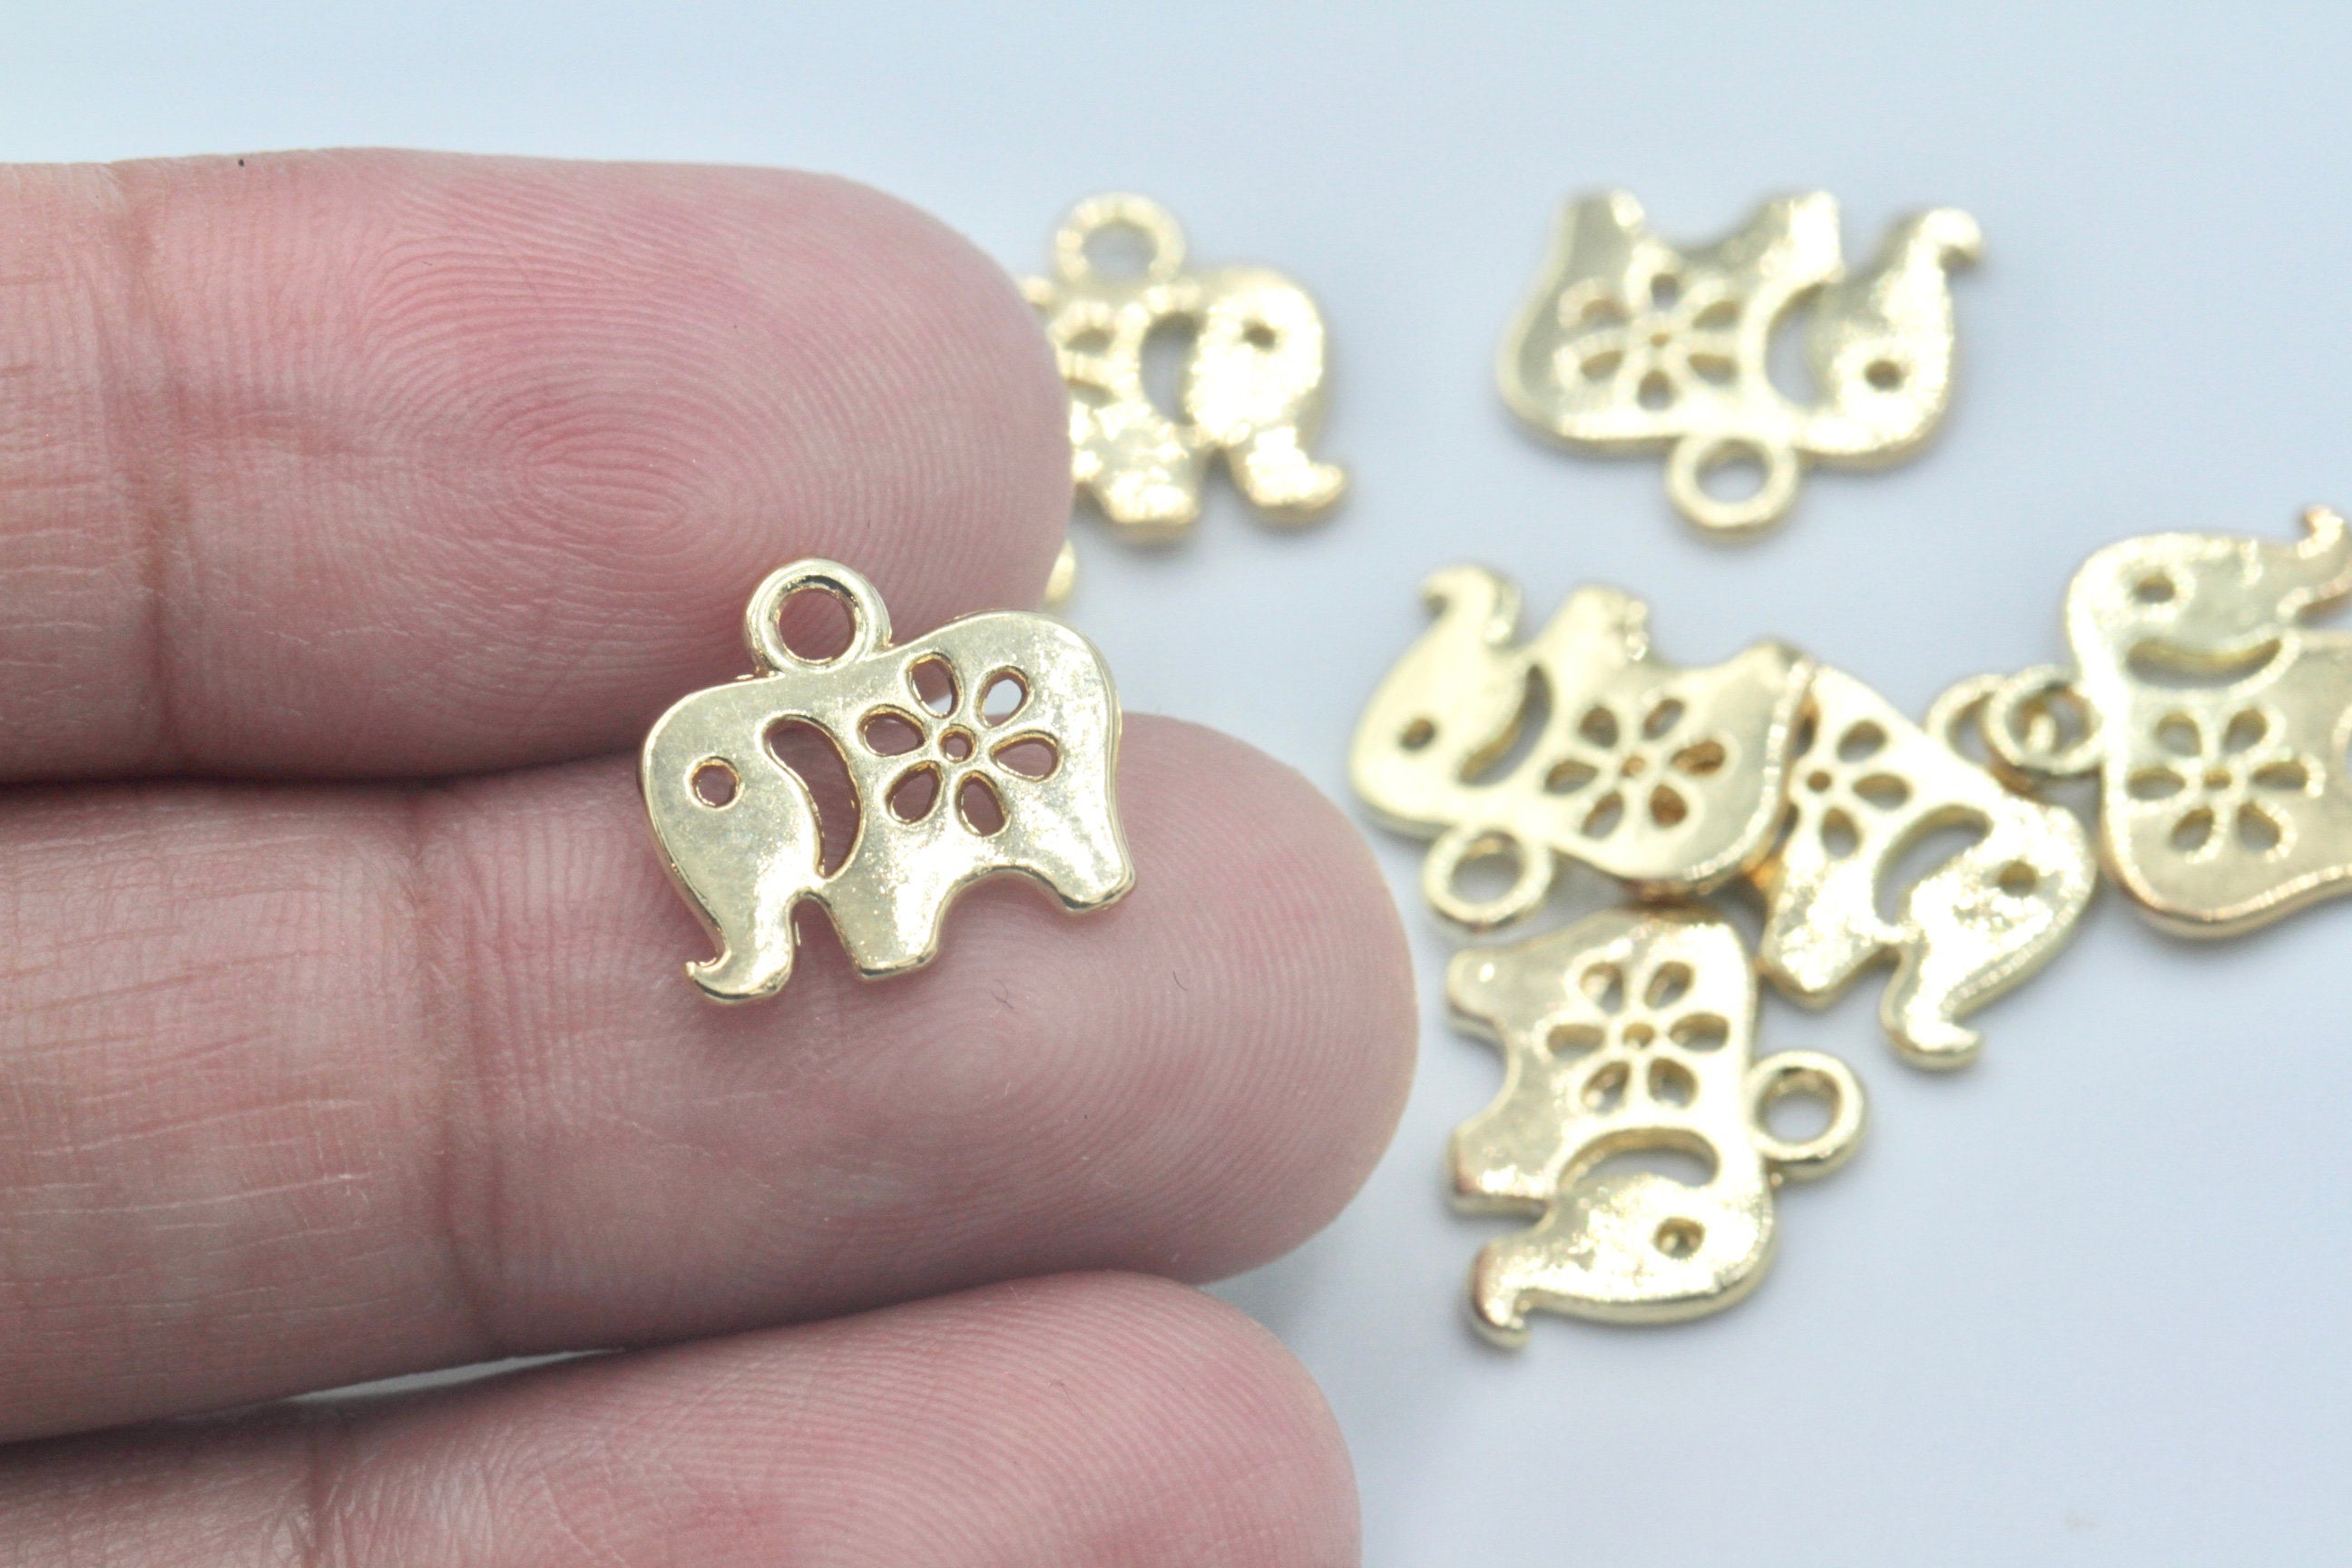 4 pcs, 12x8mm Zinc Alloy Elephant Charm / Pendant in Gold